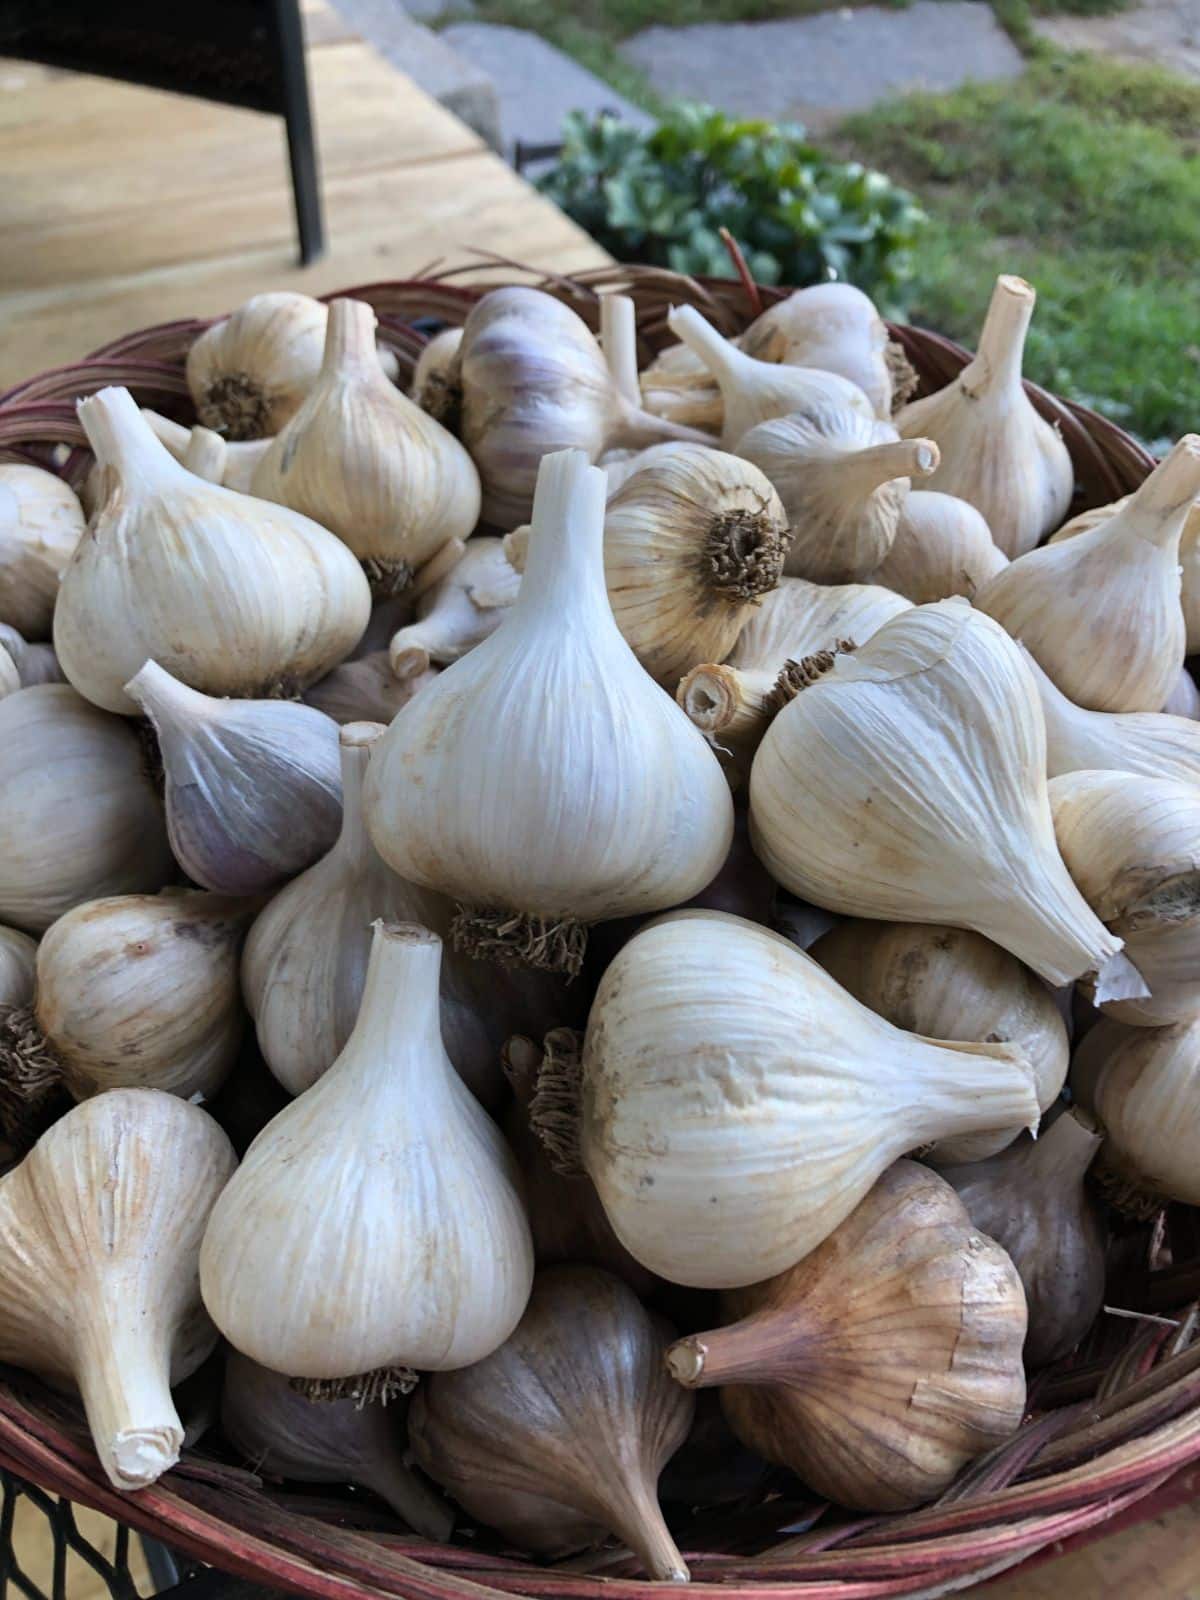 A nice crop of homegrown garlic